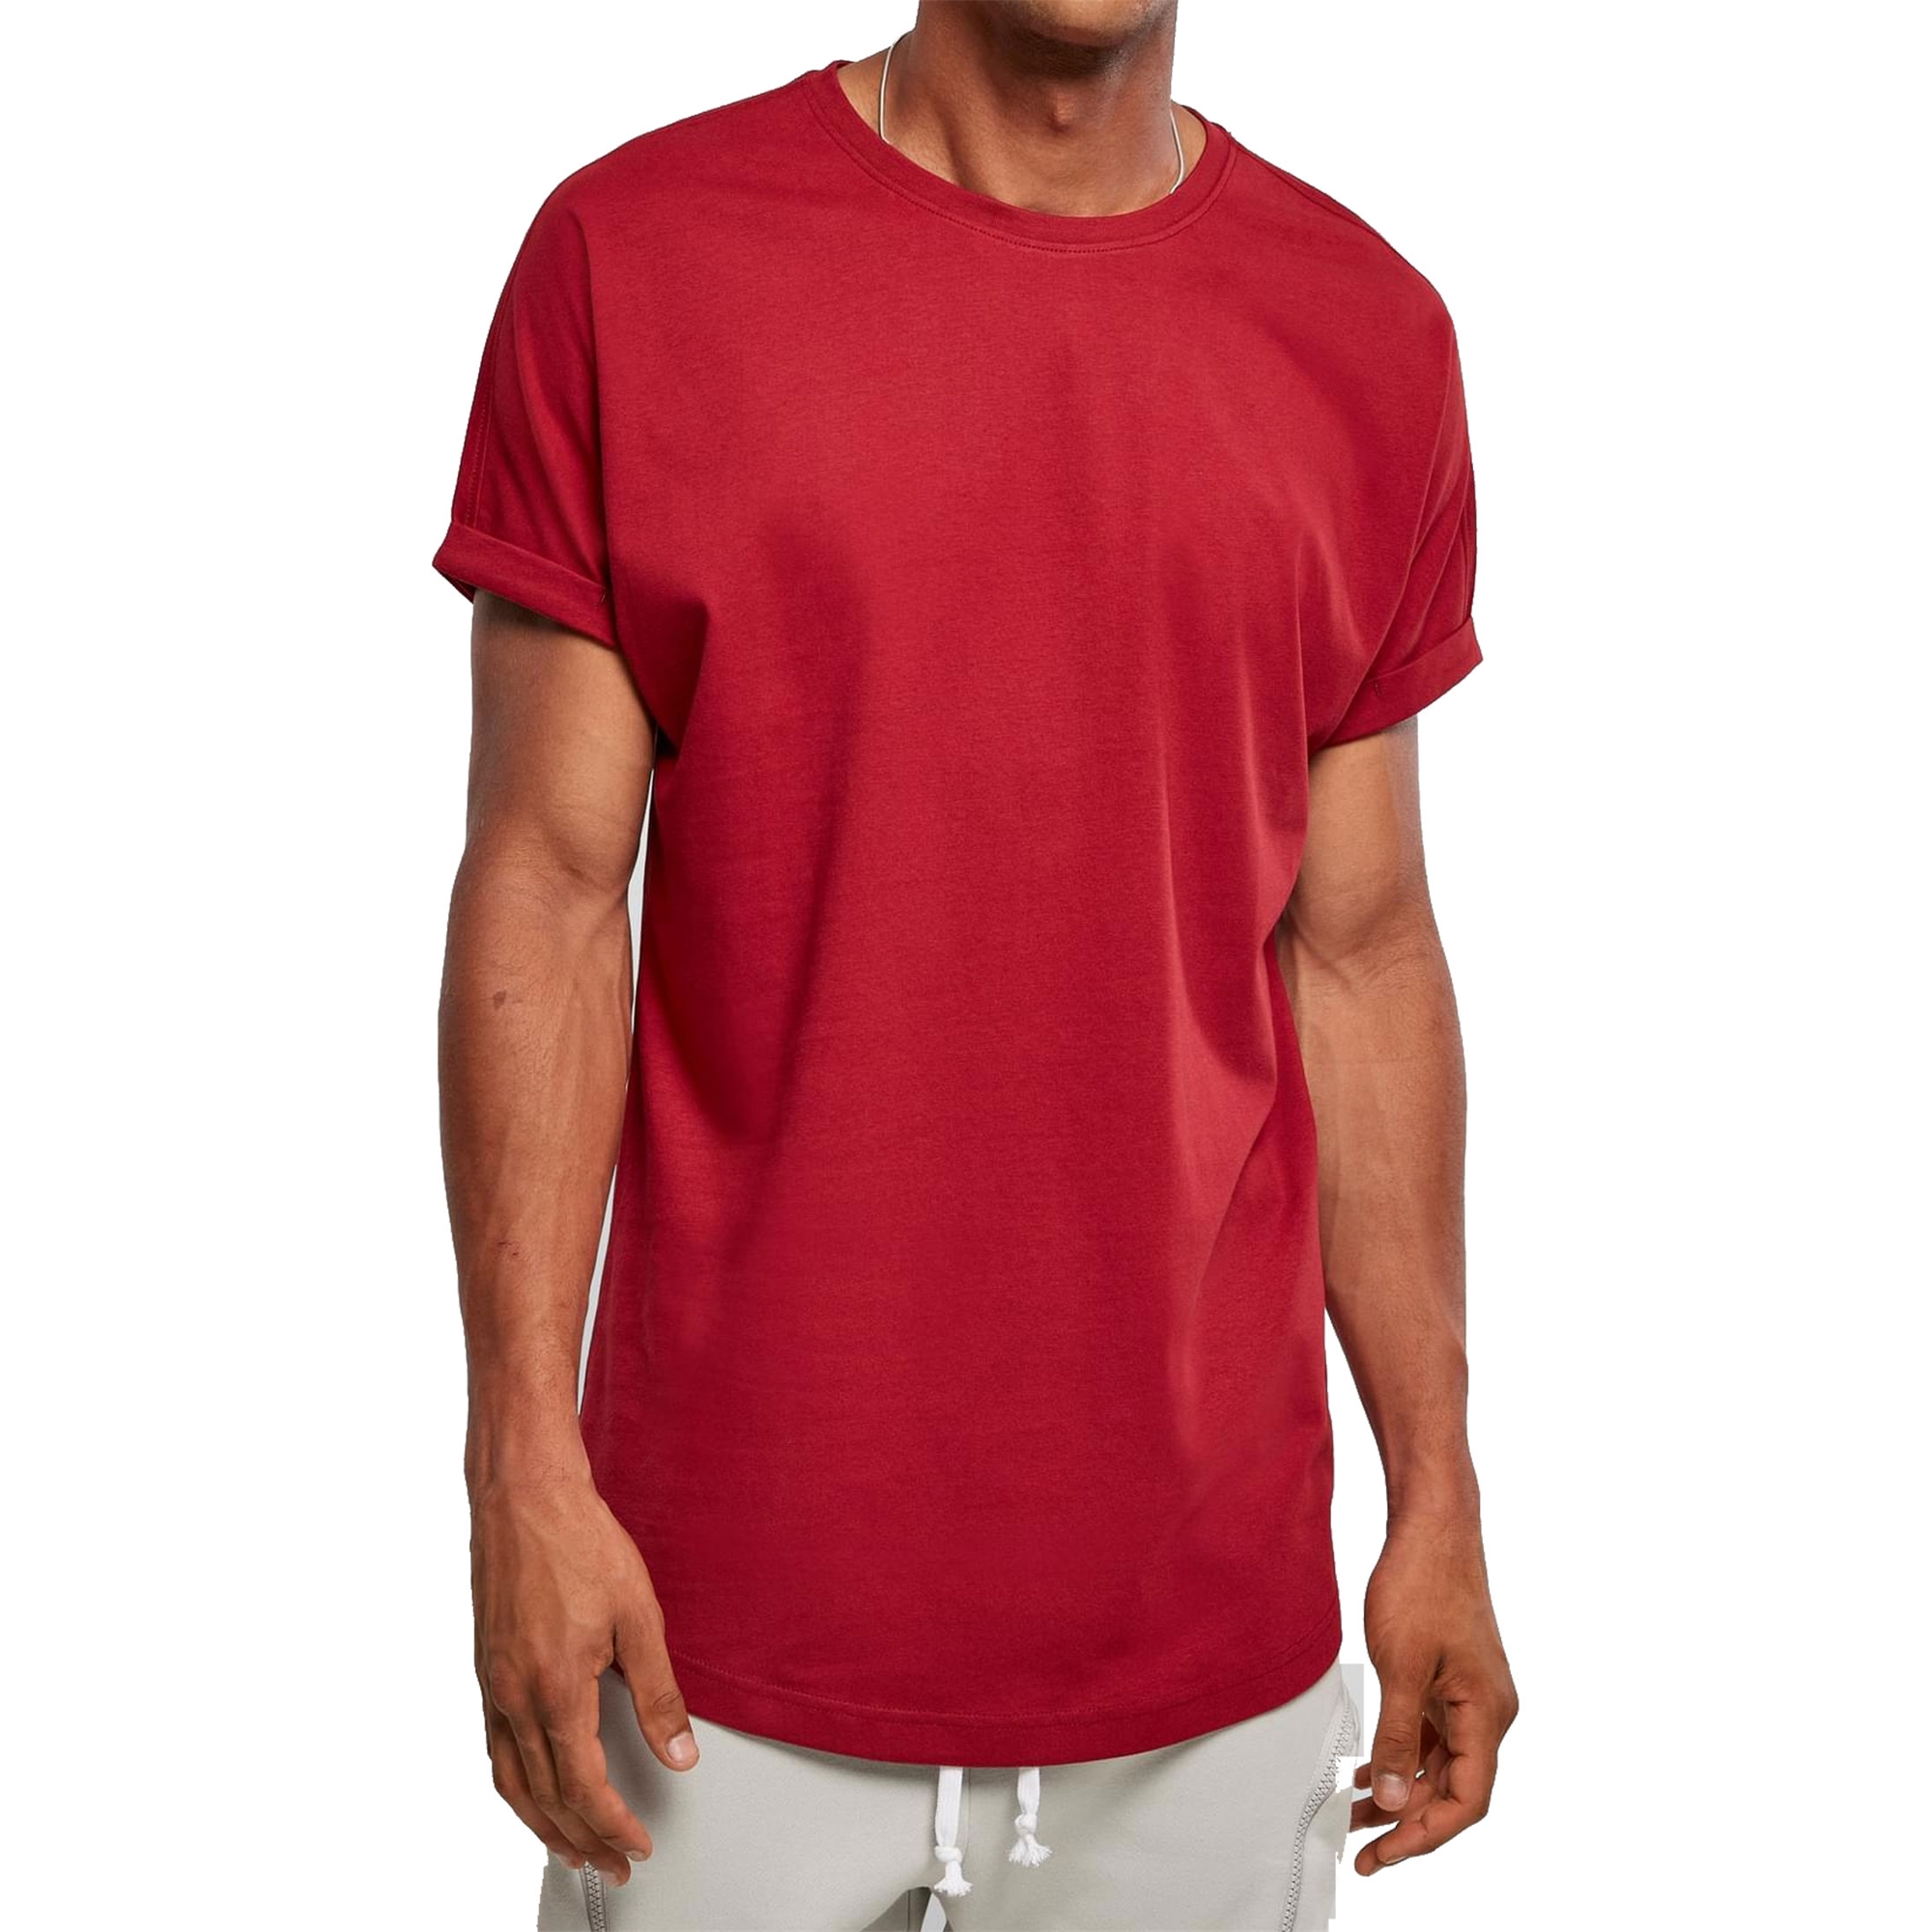 Long Urban Herren Tee | eBay Shirt extra lang oversize T-Shirt Turnup Classics Shaped